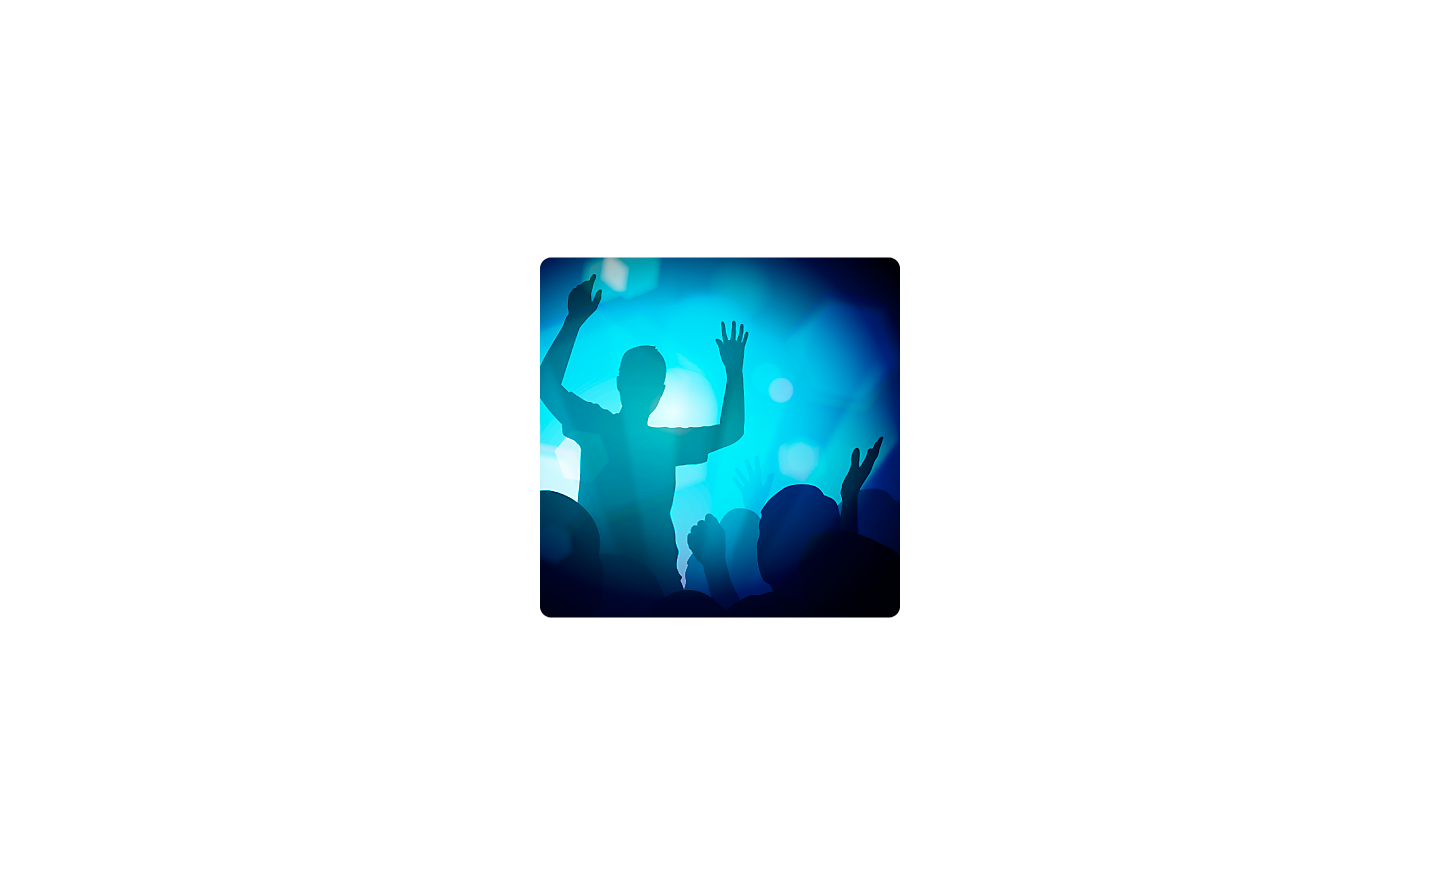 Gambar seseorang dengan tangan terangkat di lingkungan gelap dengan pencahayaan biru